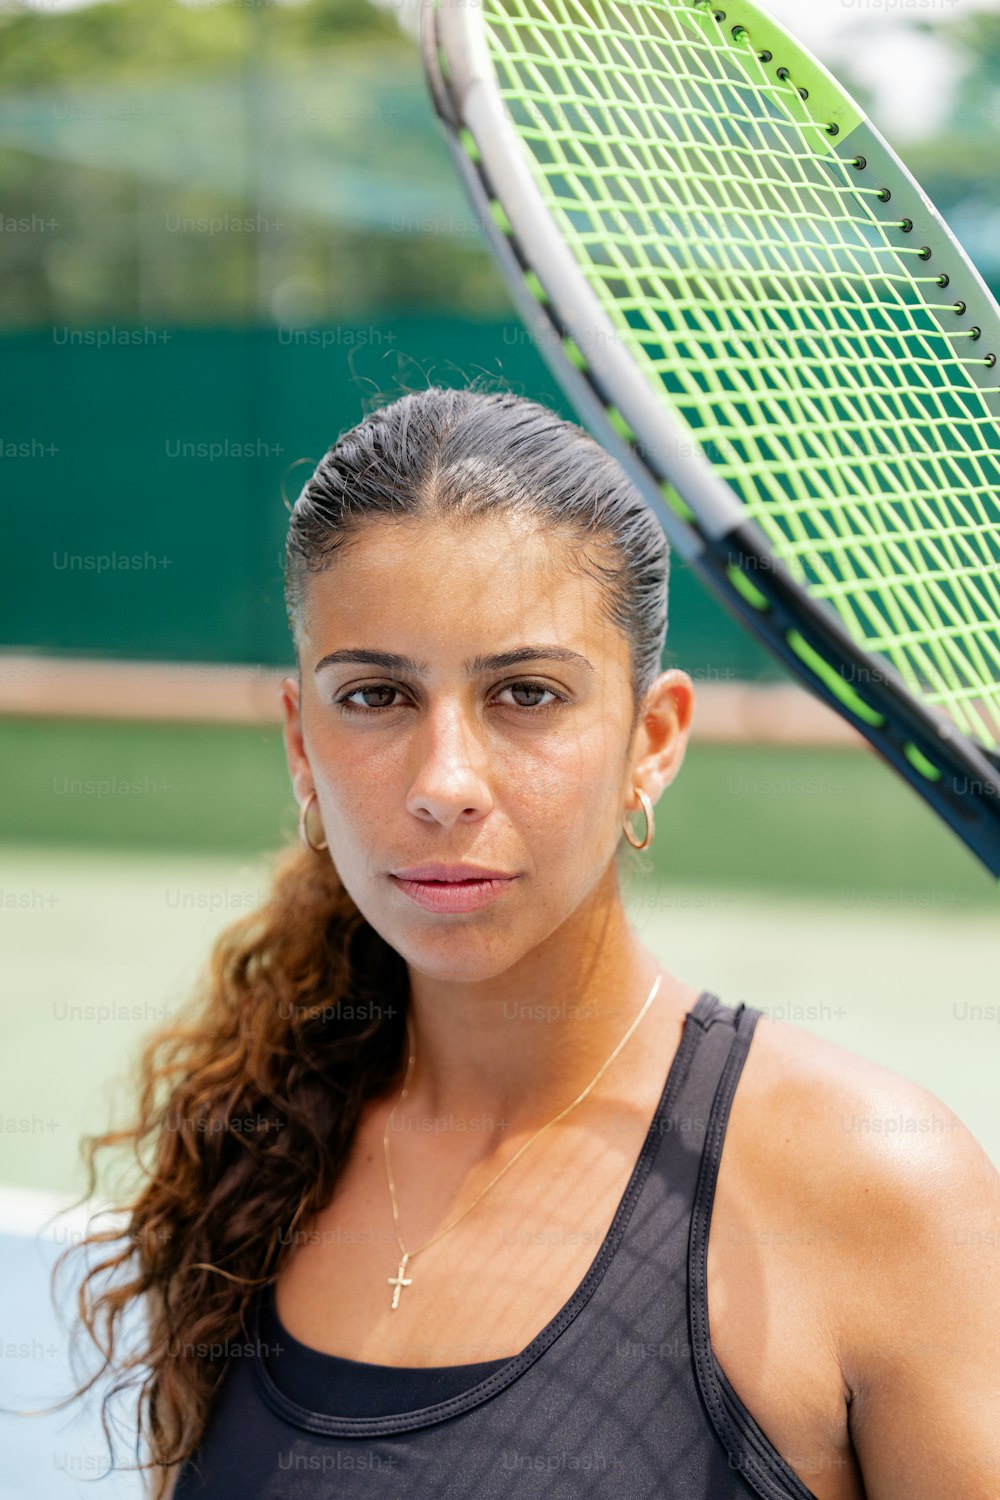 a woman holding a tennis racket on a tennis court